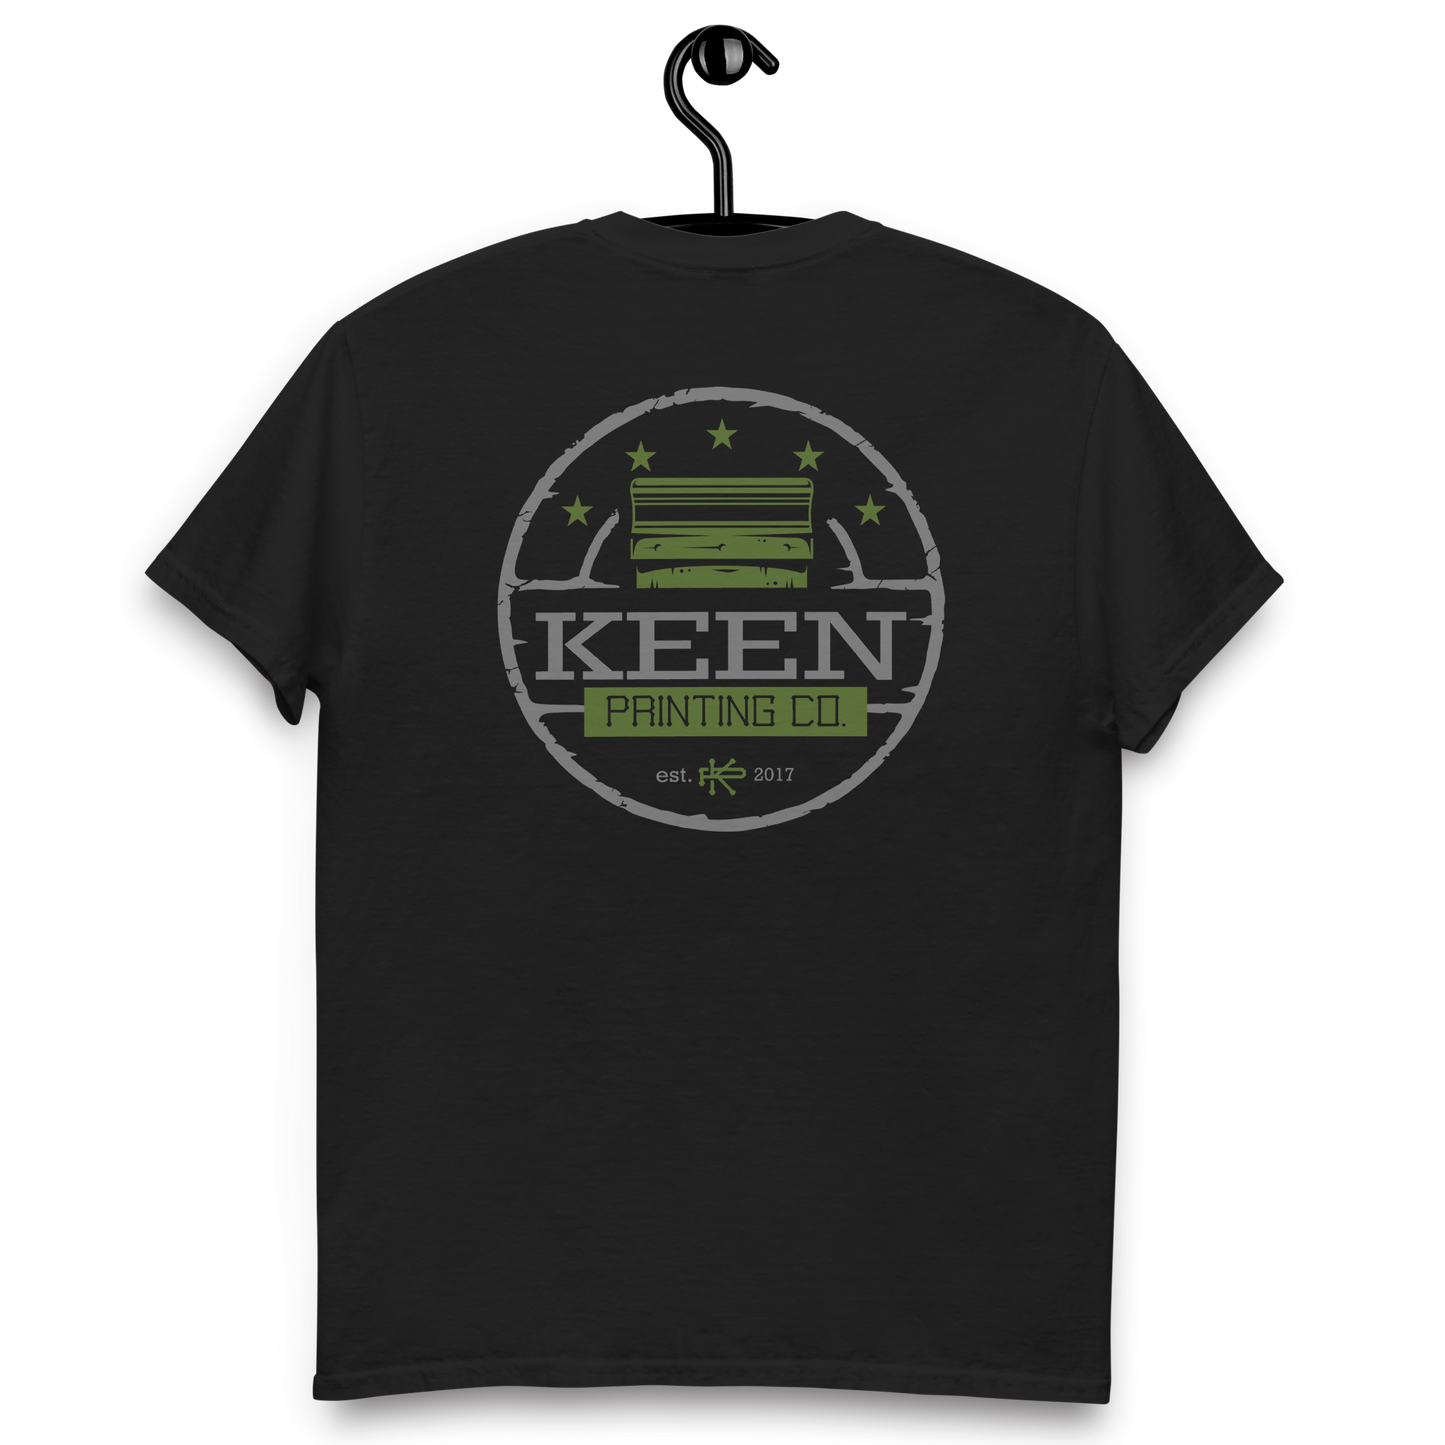 Keen Printing Co. Shop Shirt